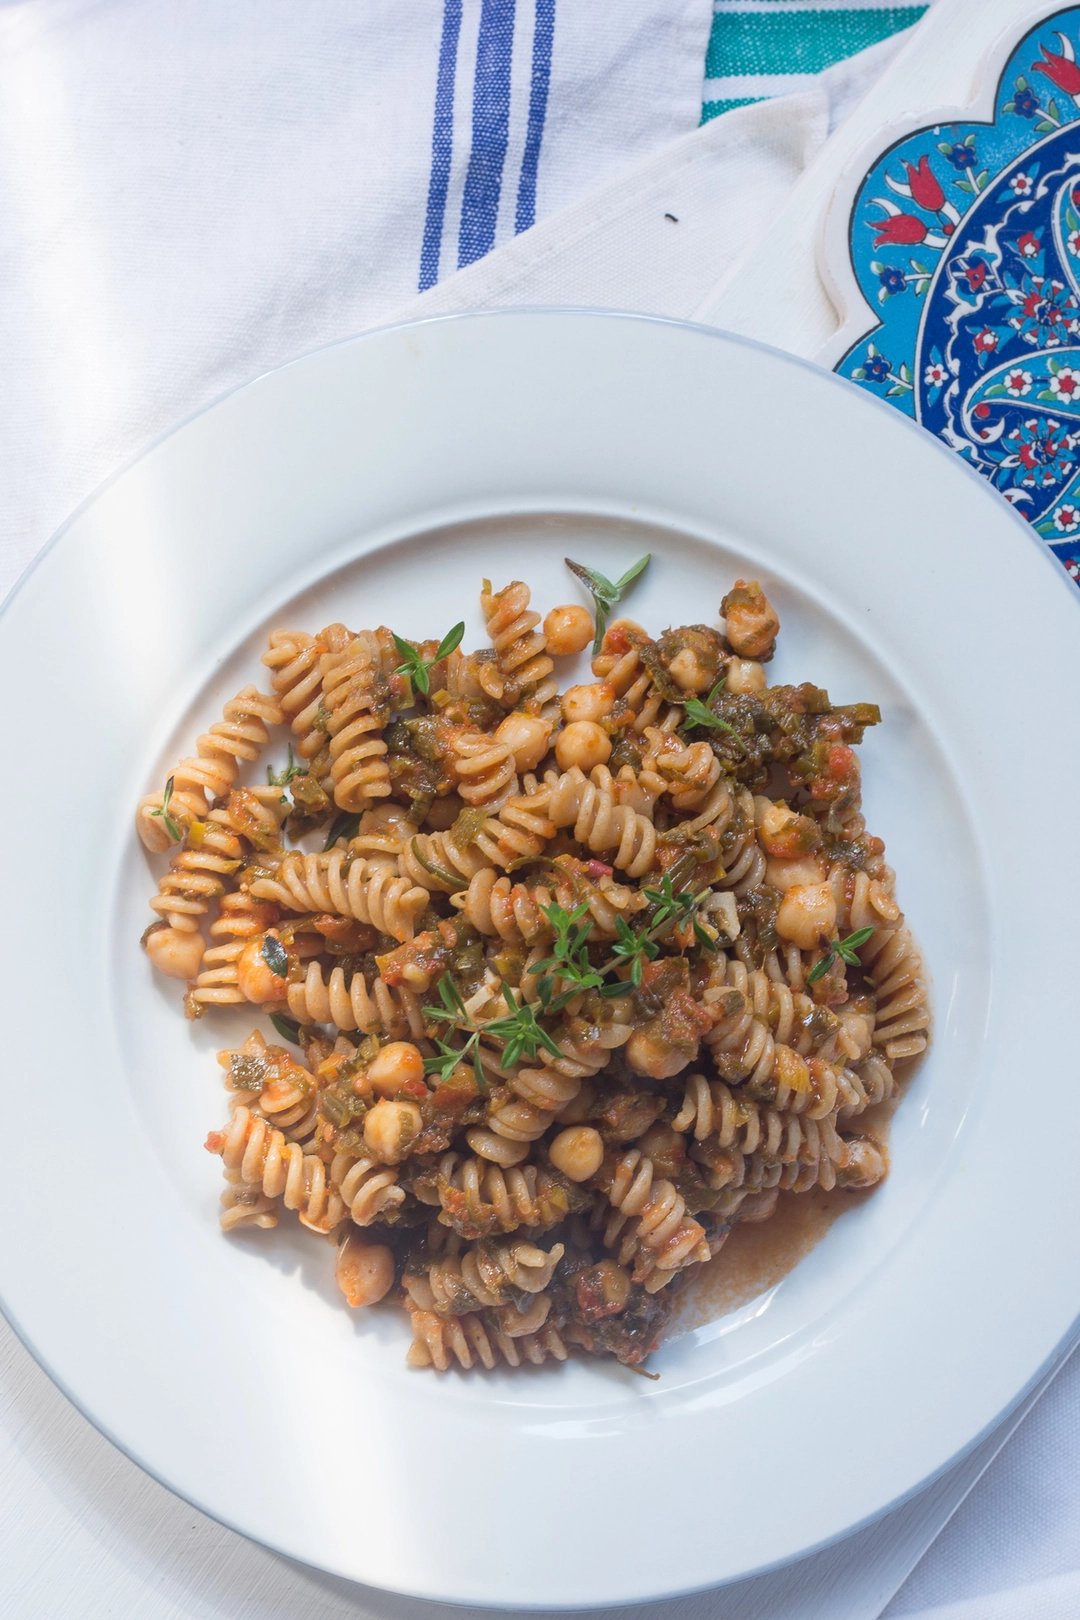 Recipe:  Vegan pasta with chickpeas and herbs ragu